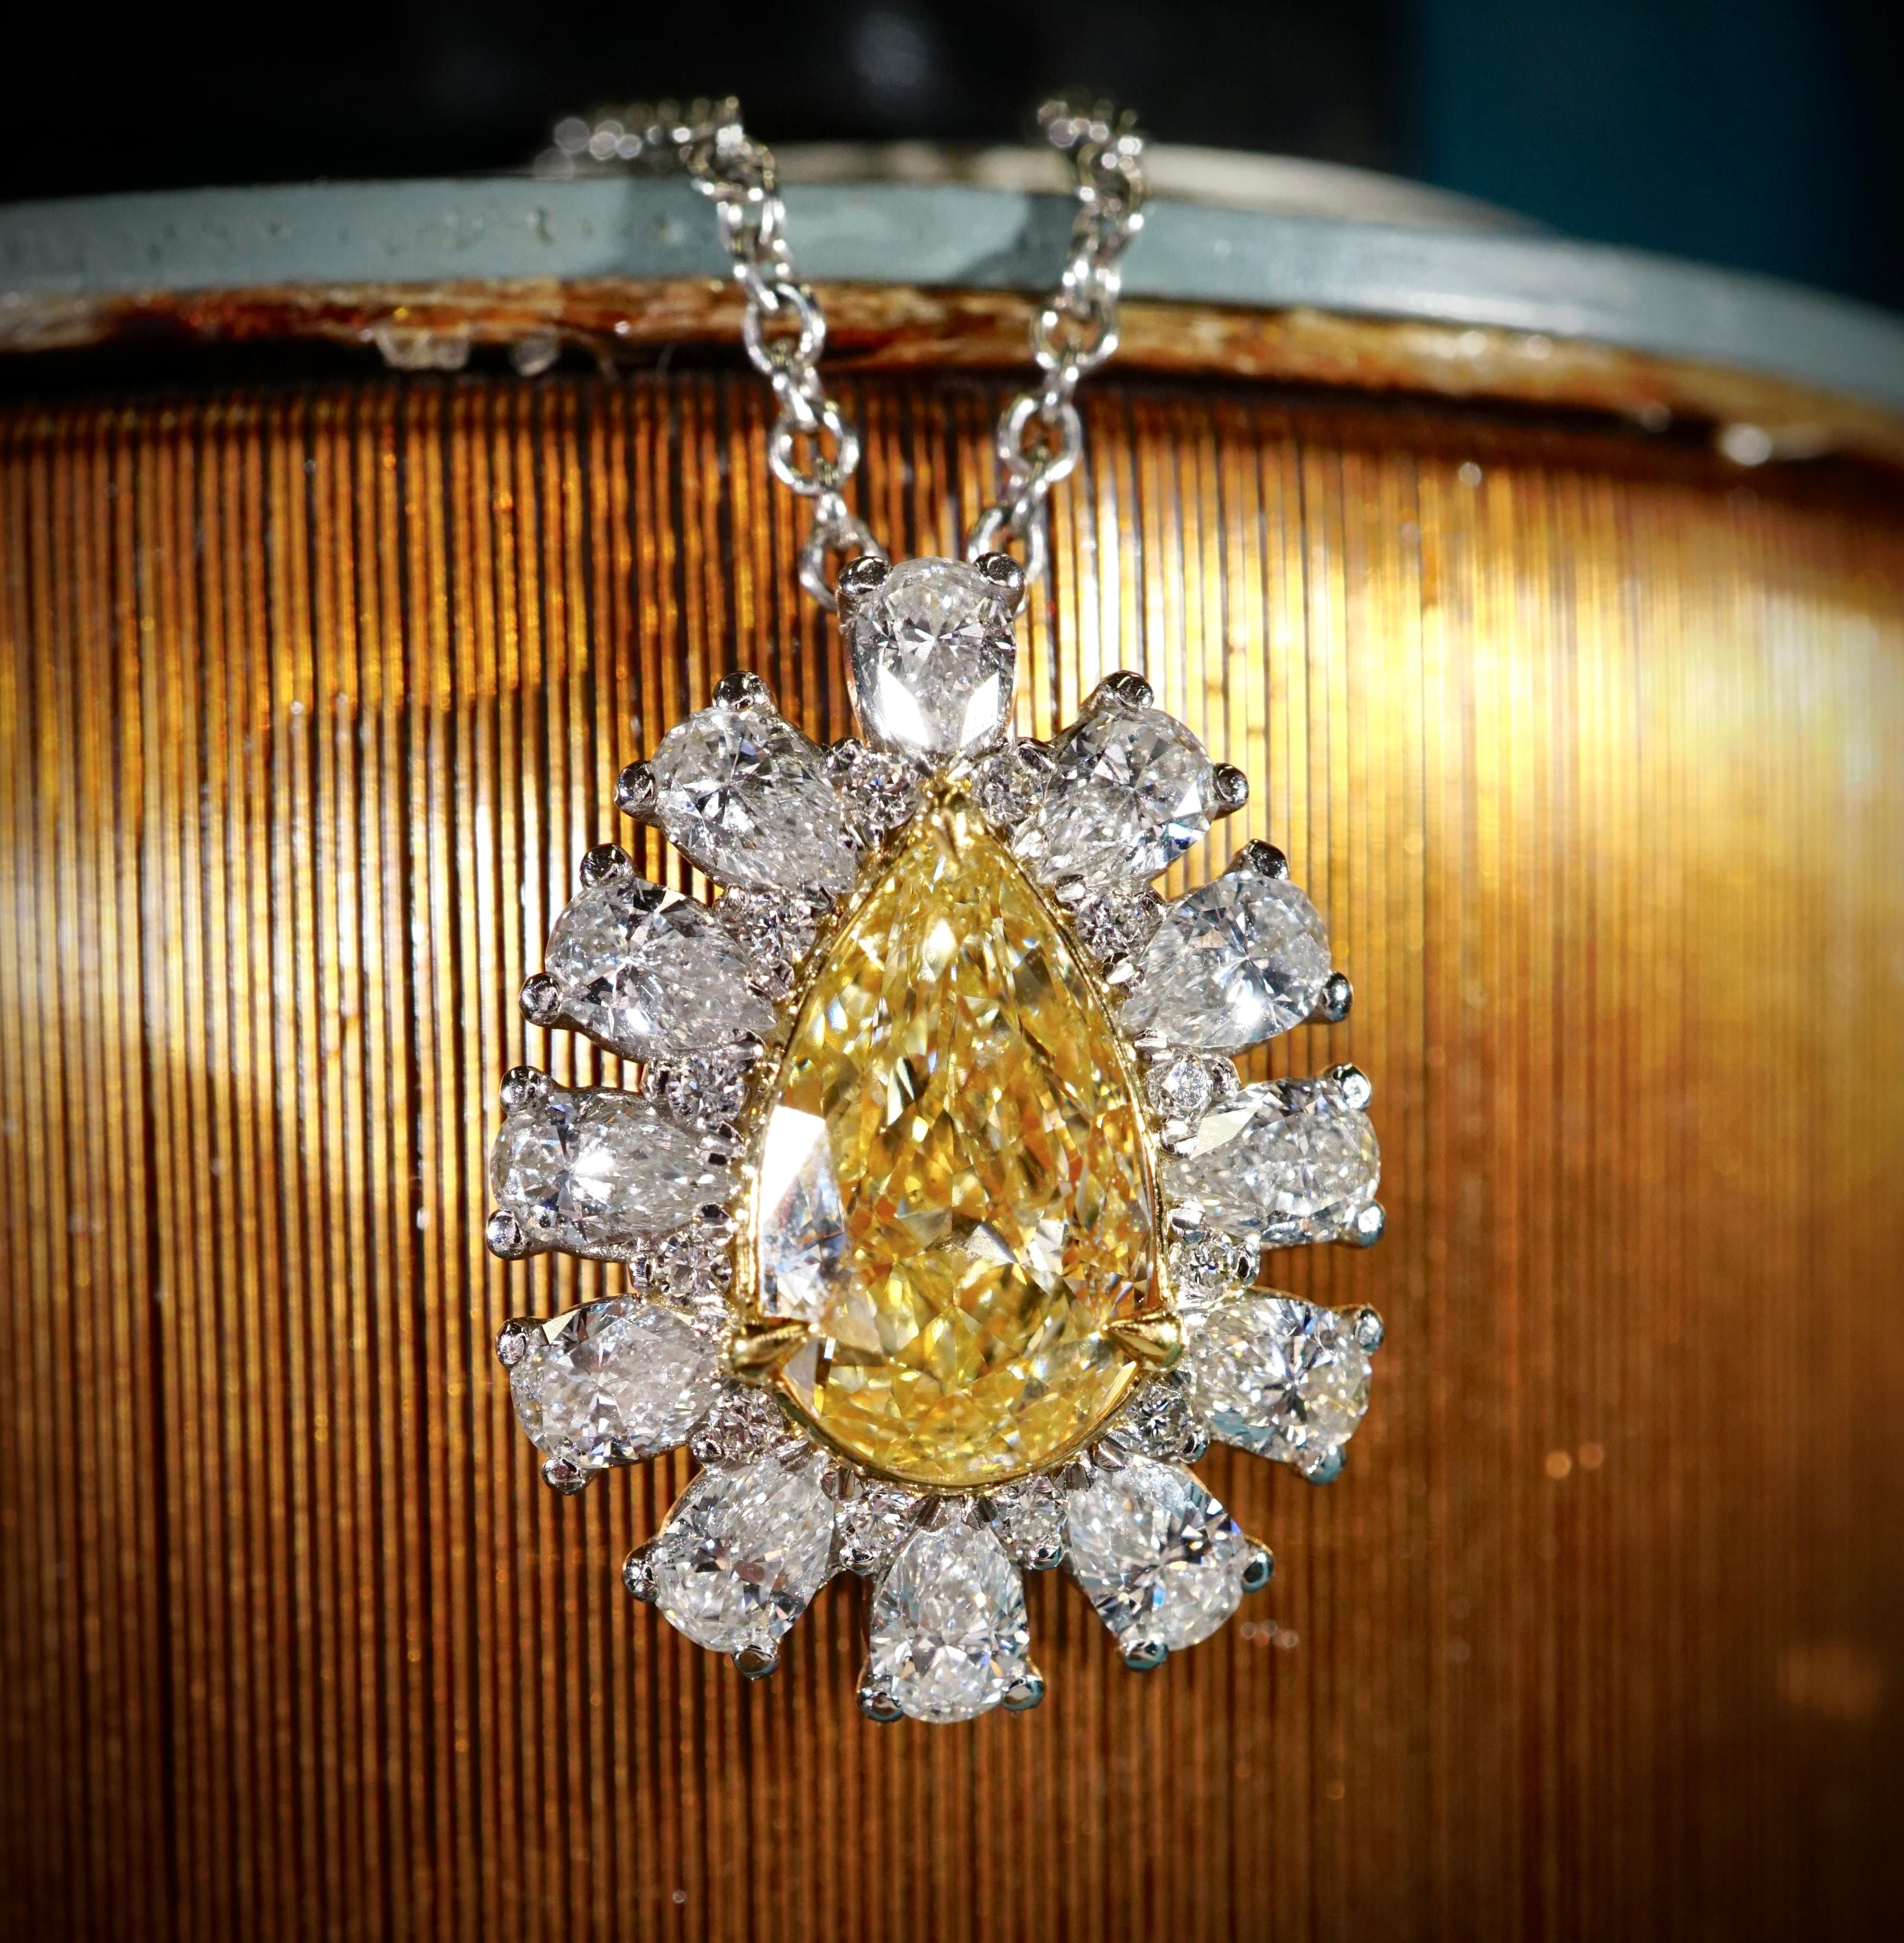 Diamond pendant, with IGI certificate number 4703021671. Center stone: 2.03ct Fancy Light Yellow VS2 Pear Shape cut natural diamond. Measurements: 11.2 x 6.7 mm. Side stones: 12 Pear Shape cut diamonds D-E-F SI1/SI2. Measurements: 4.30 x 2.65mm